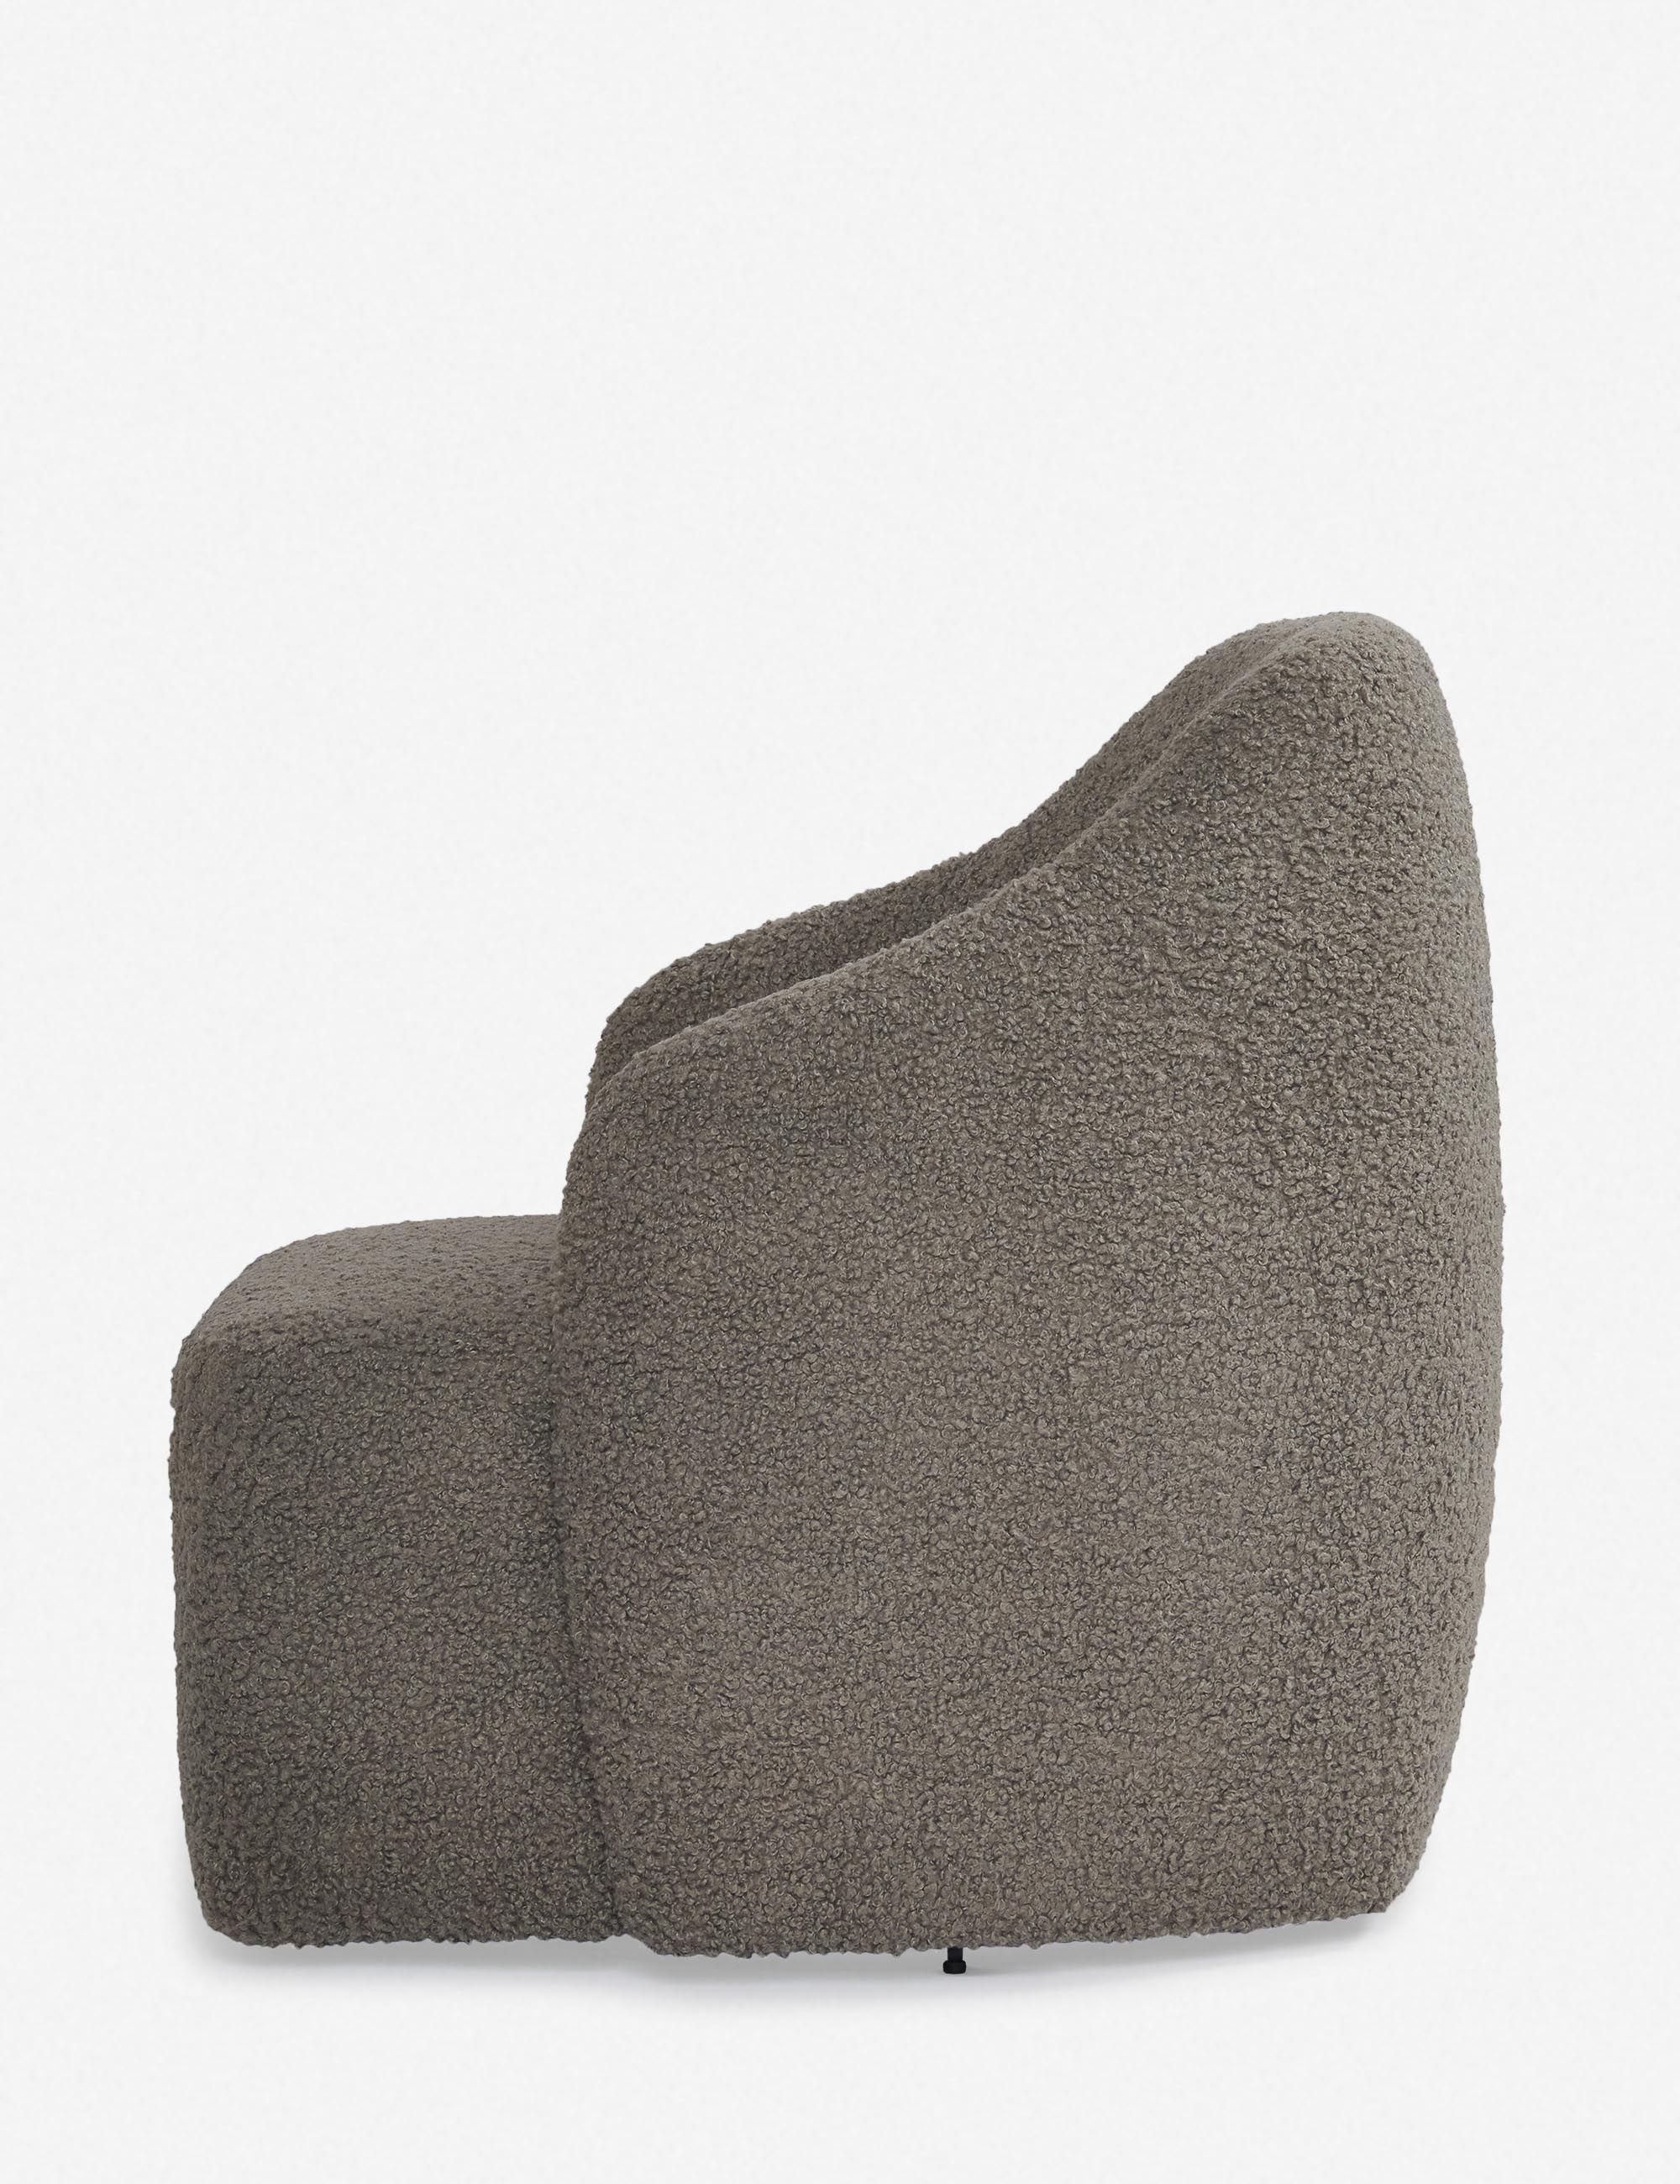 Tobi Swivel Chair, Gray - Image 9